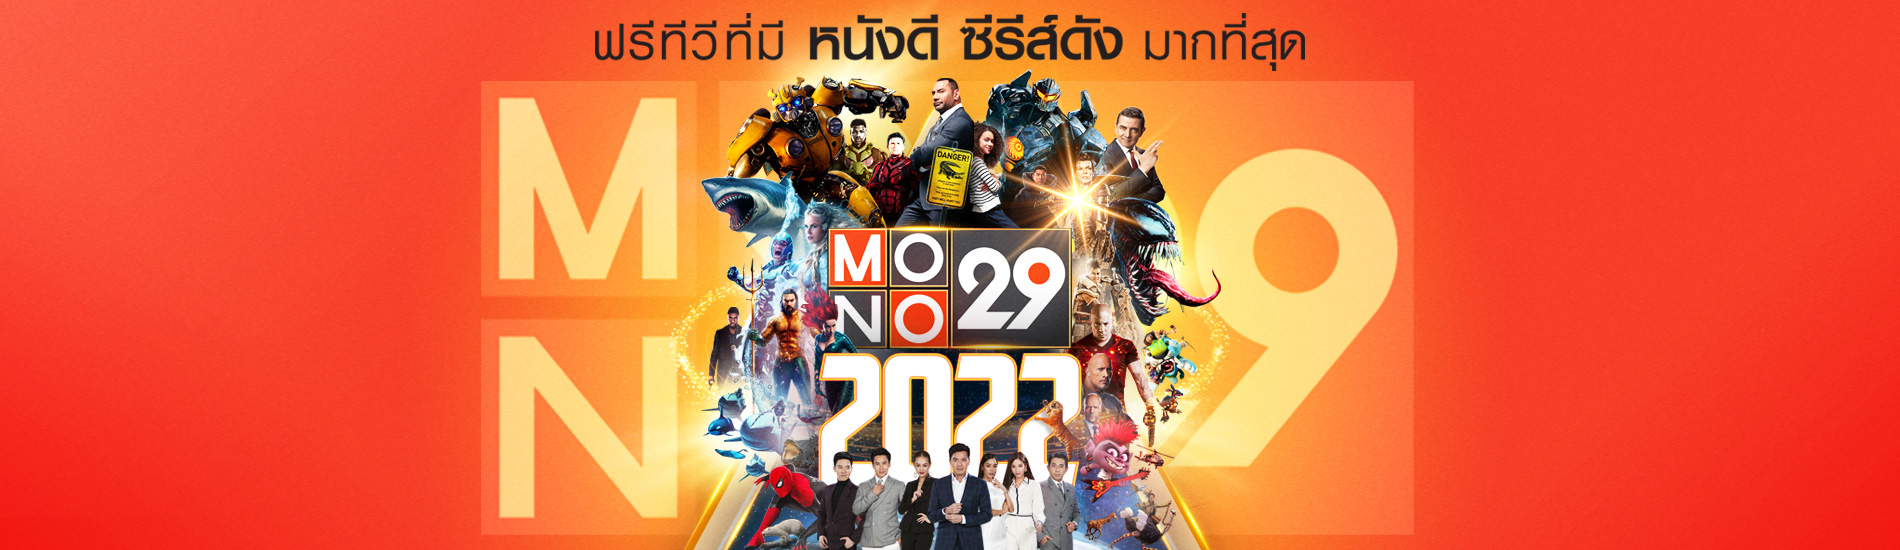 MONO29​ Happy New Year 2022